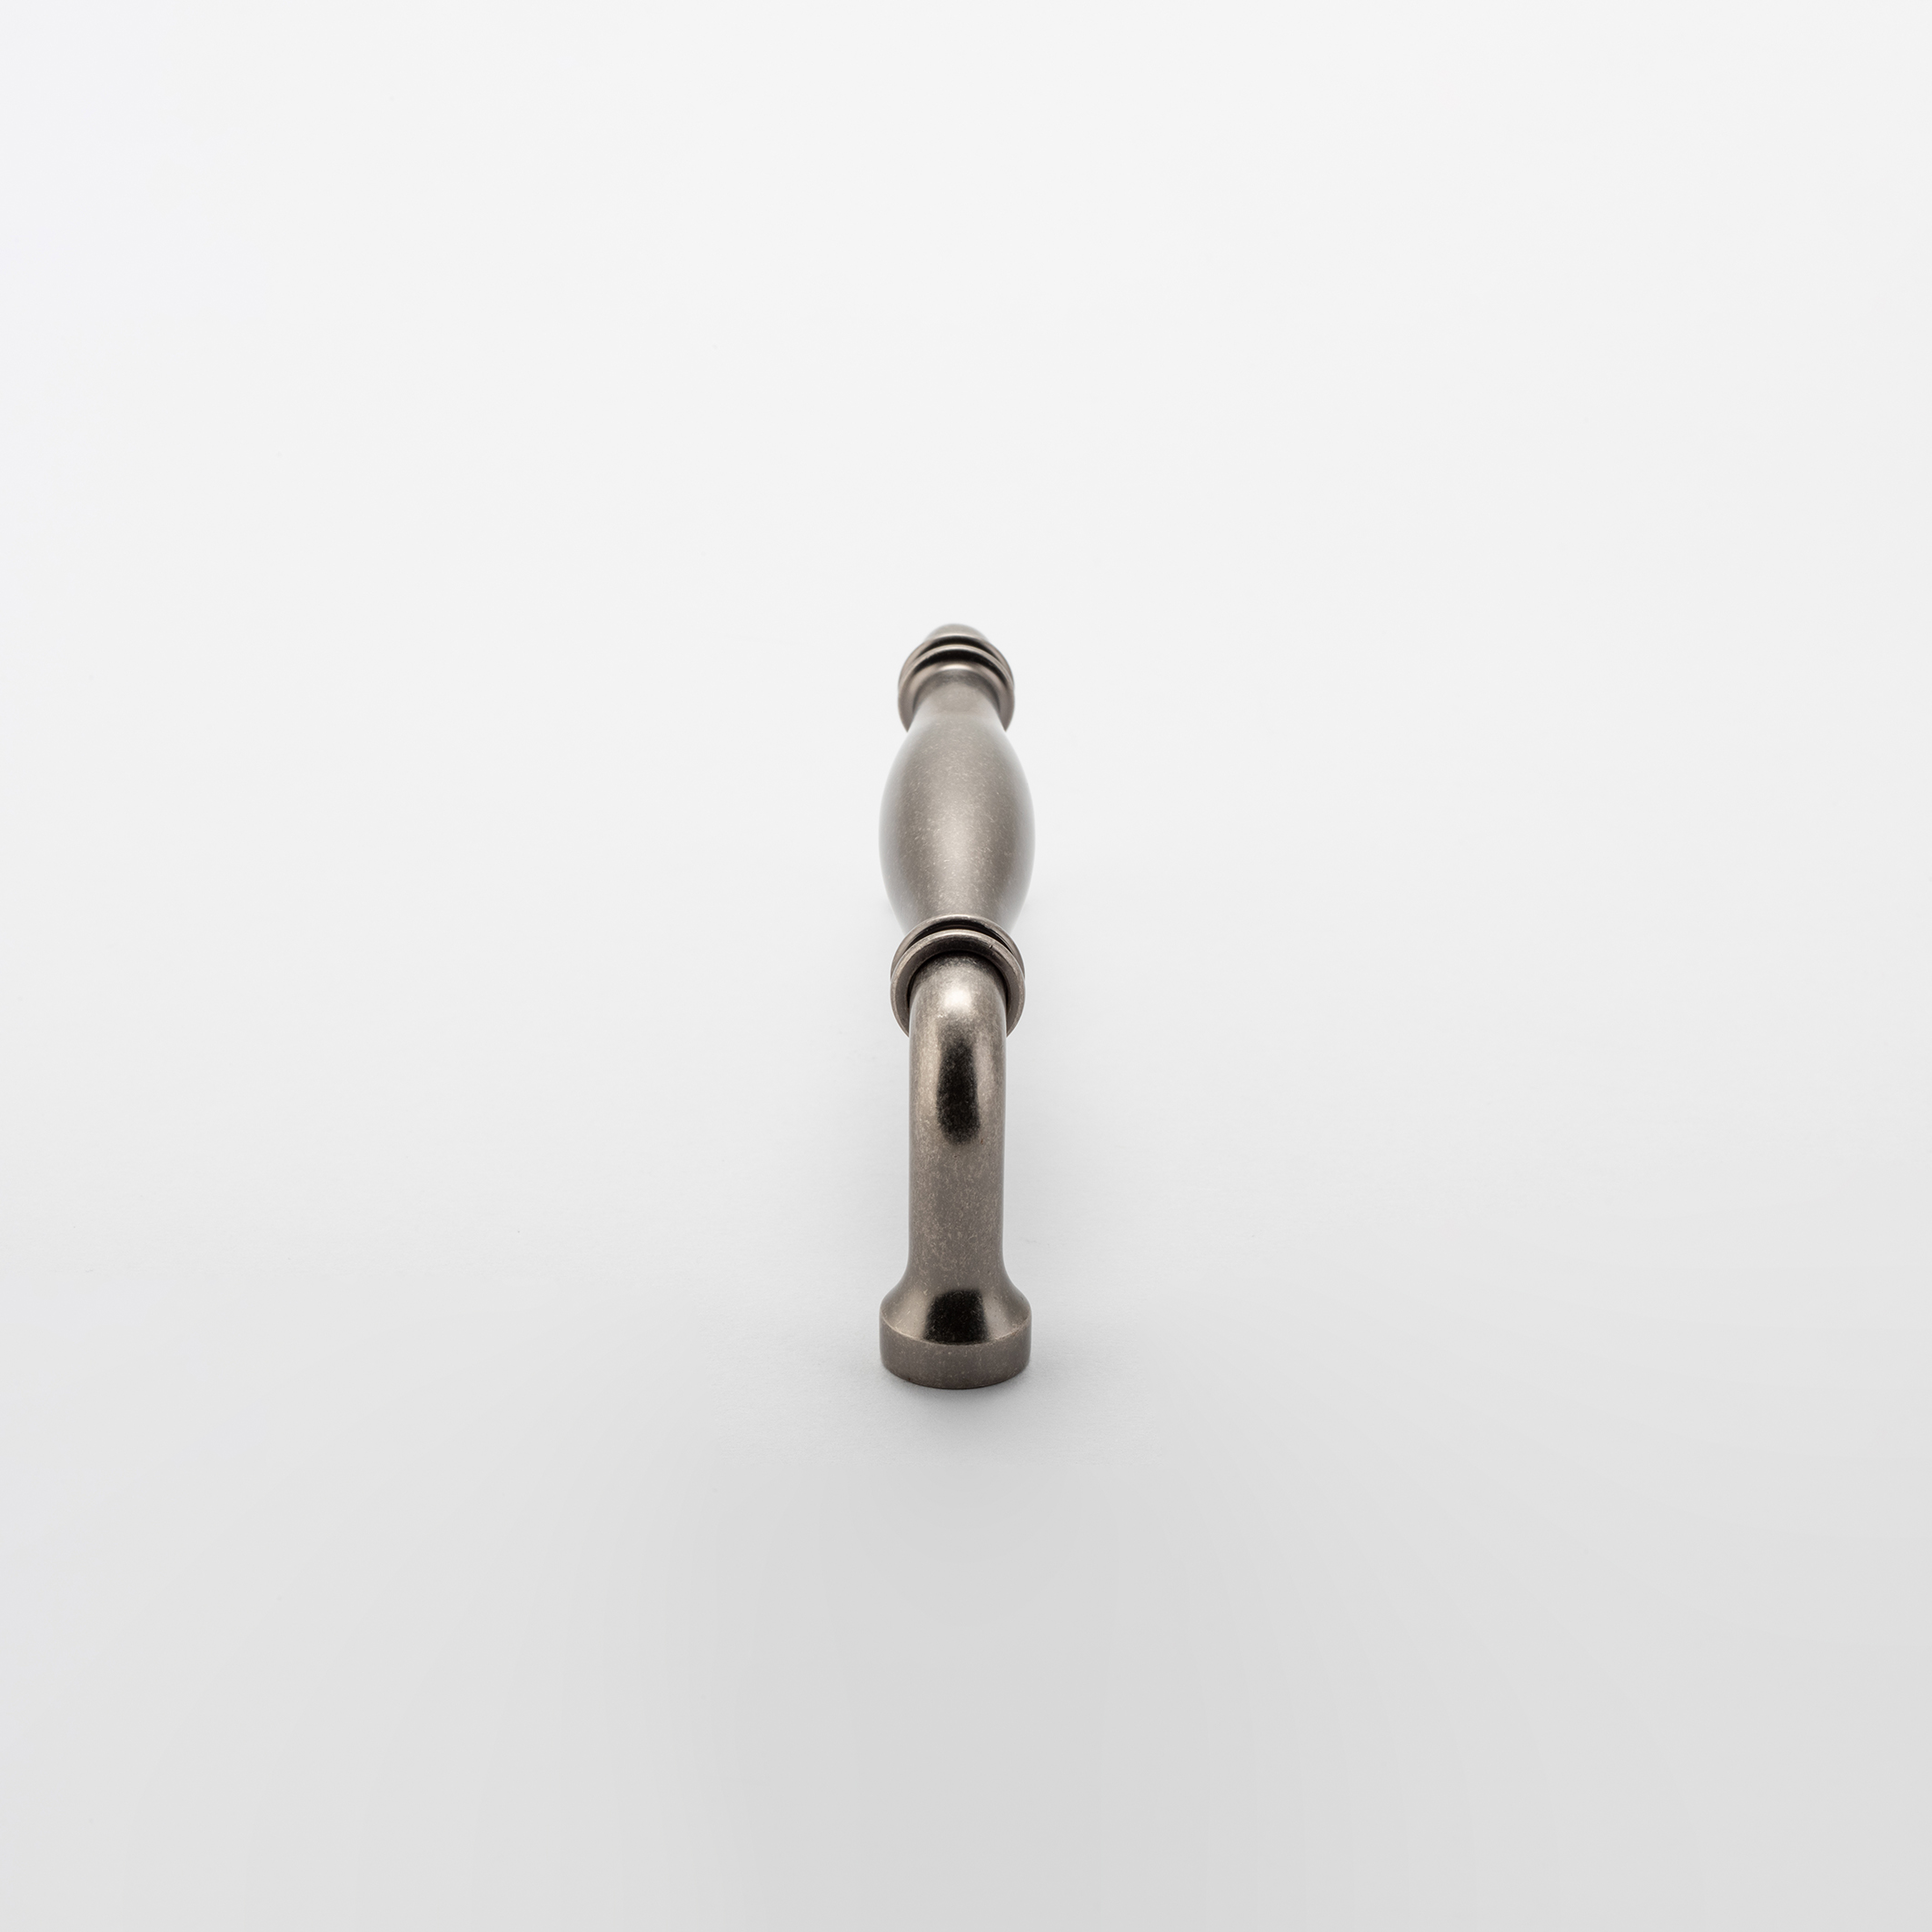 21087 - Sarlat Cabinet Pull - CTC256mm - Distressed Nickel